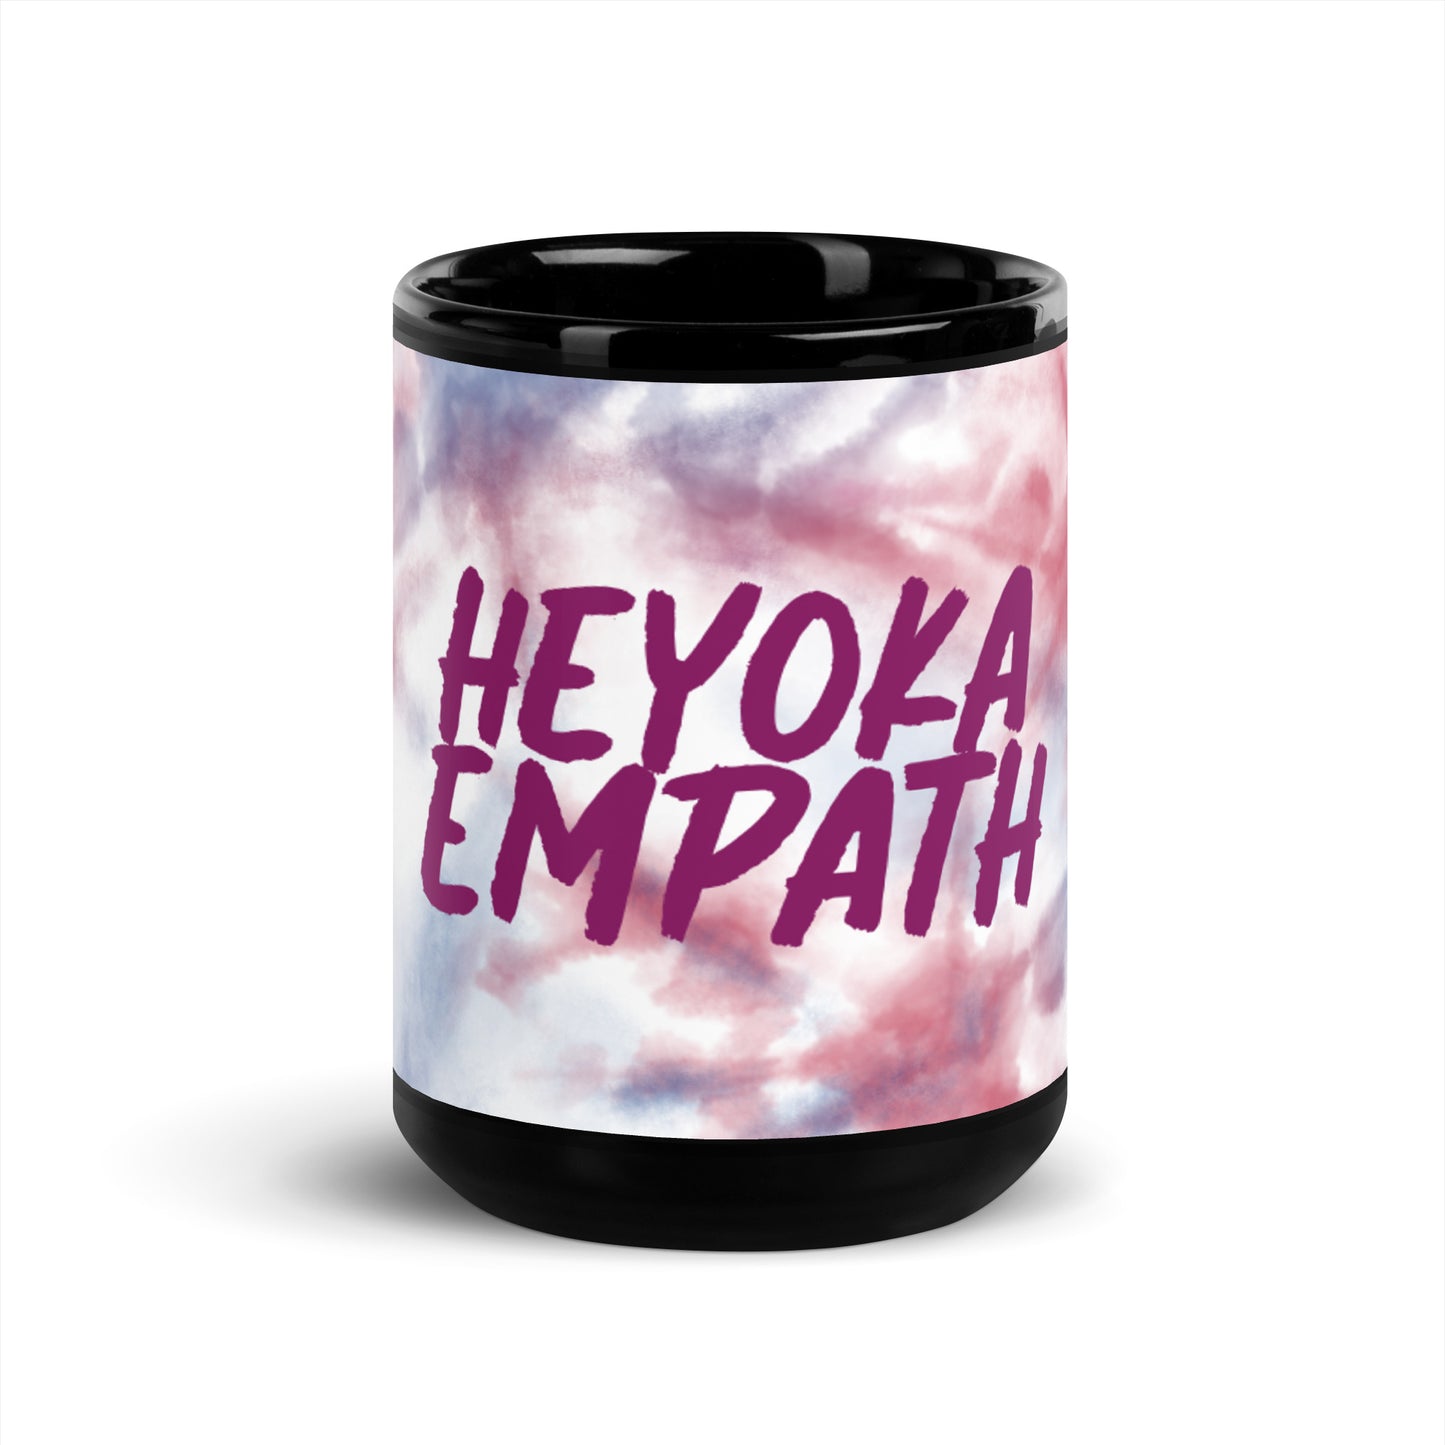 Tie Dye Black Glossy Mug - Heyoka Empath